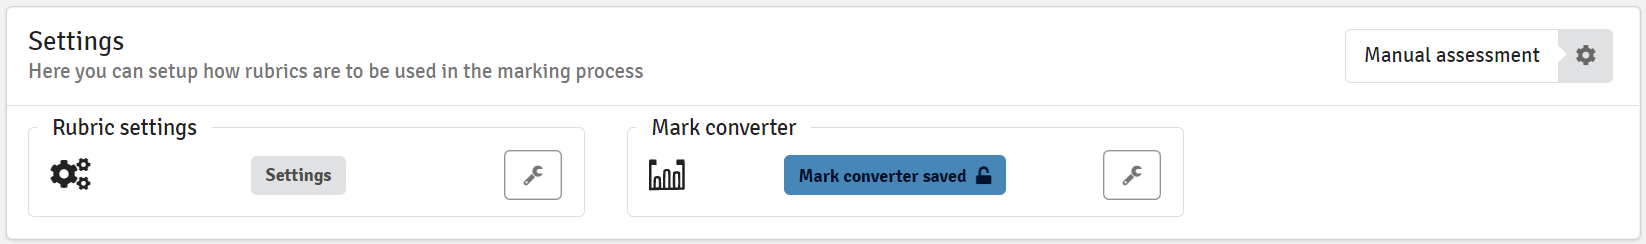 Mark_Converter_Saved.png